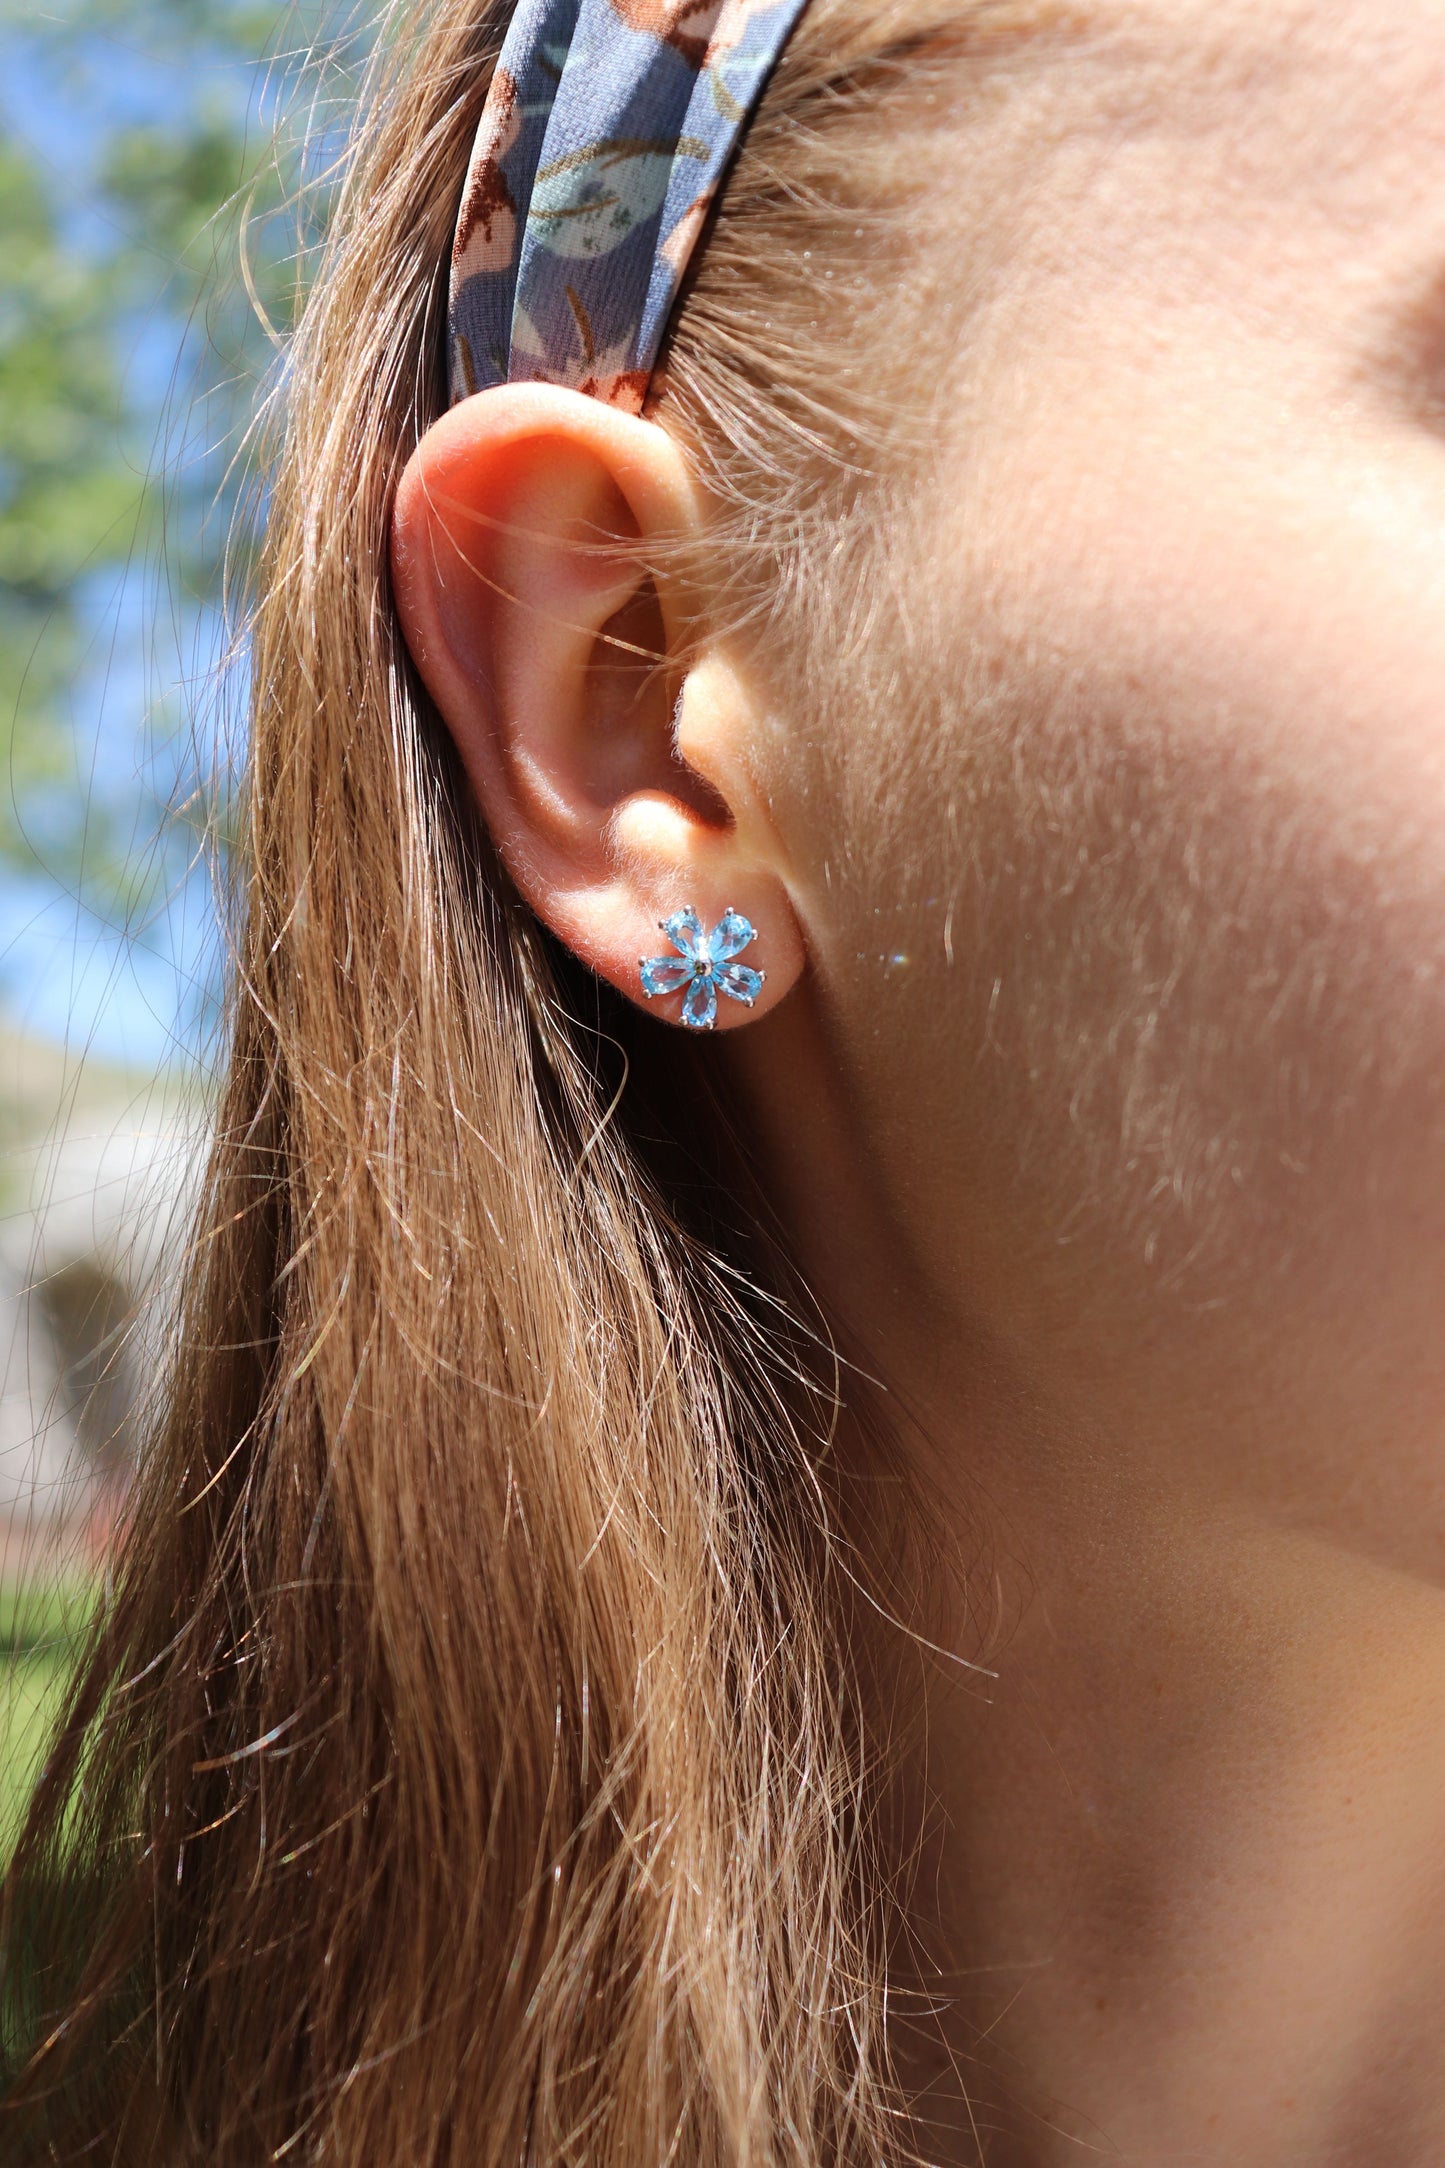 Flower gemstone earring studs